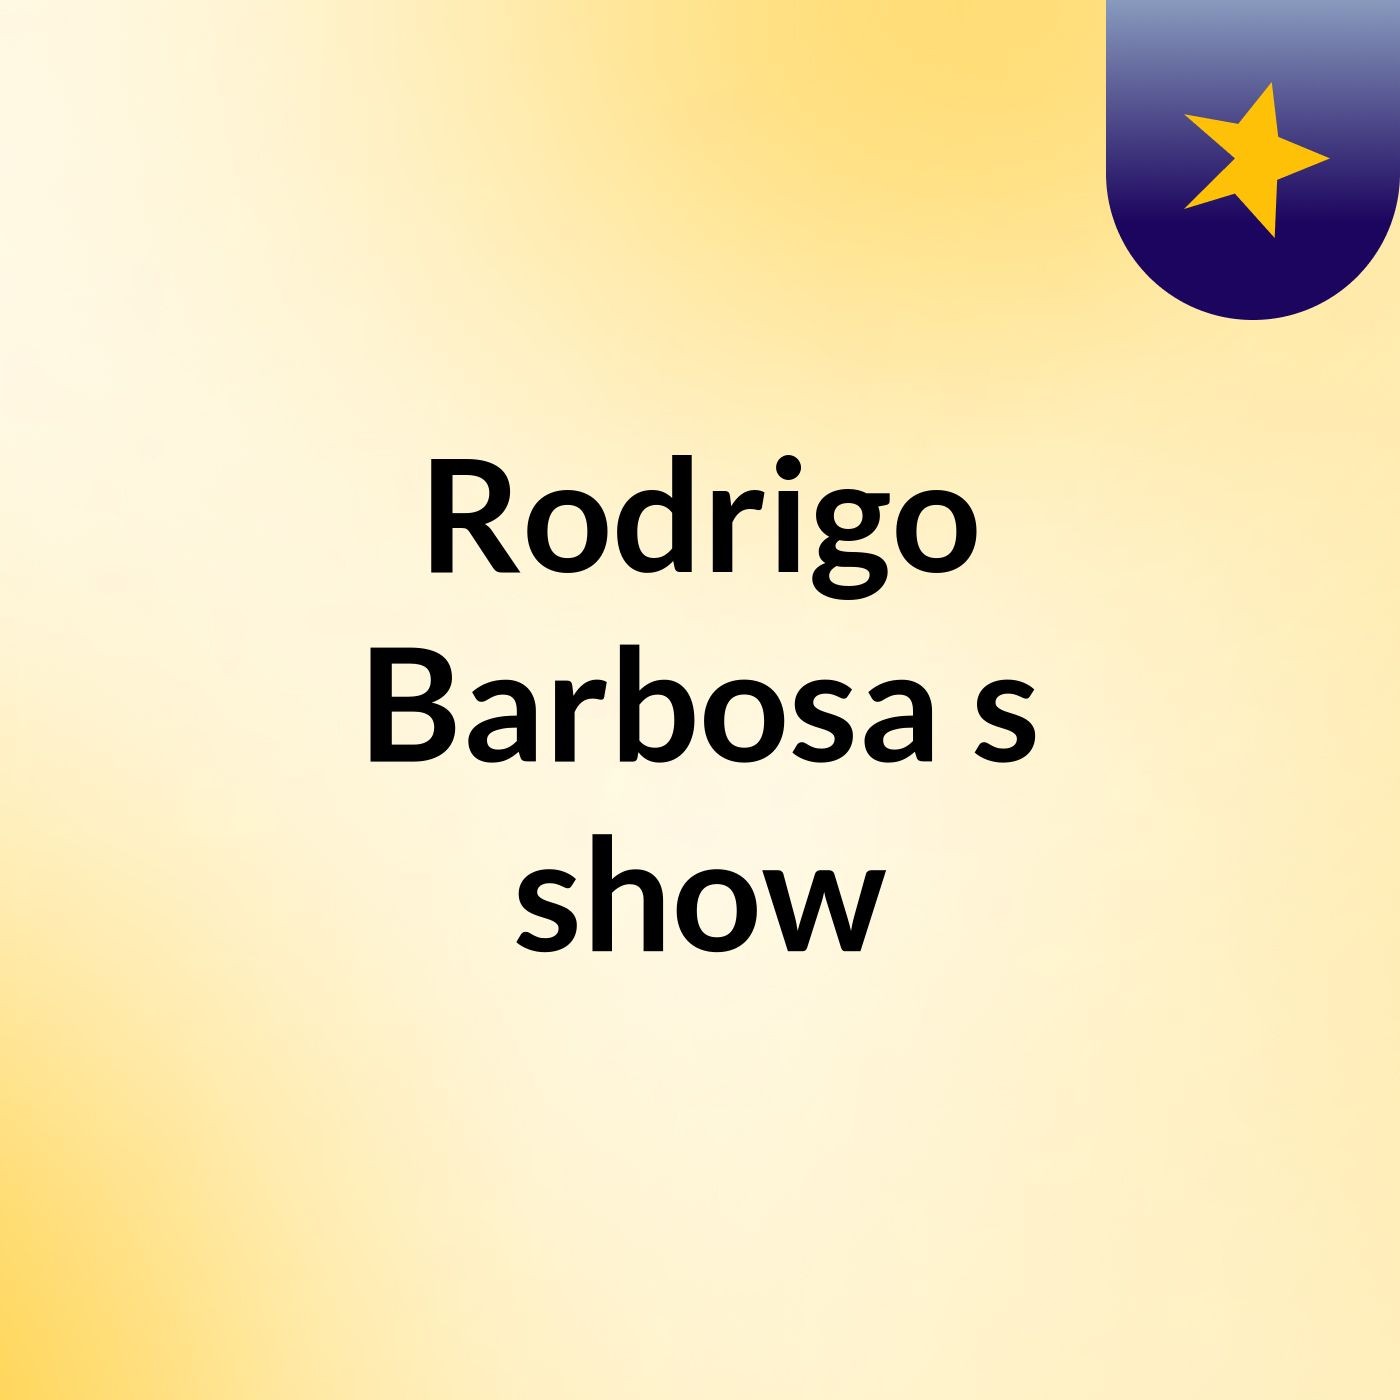 Rodrigo Barbosa's show